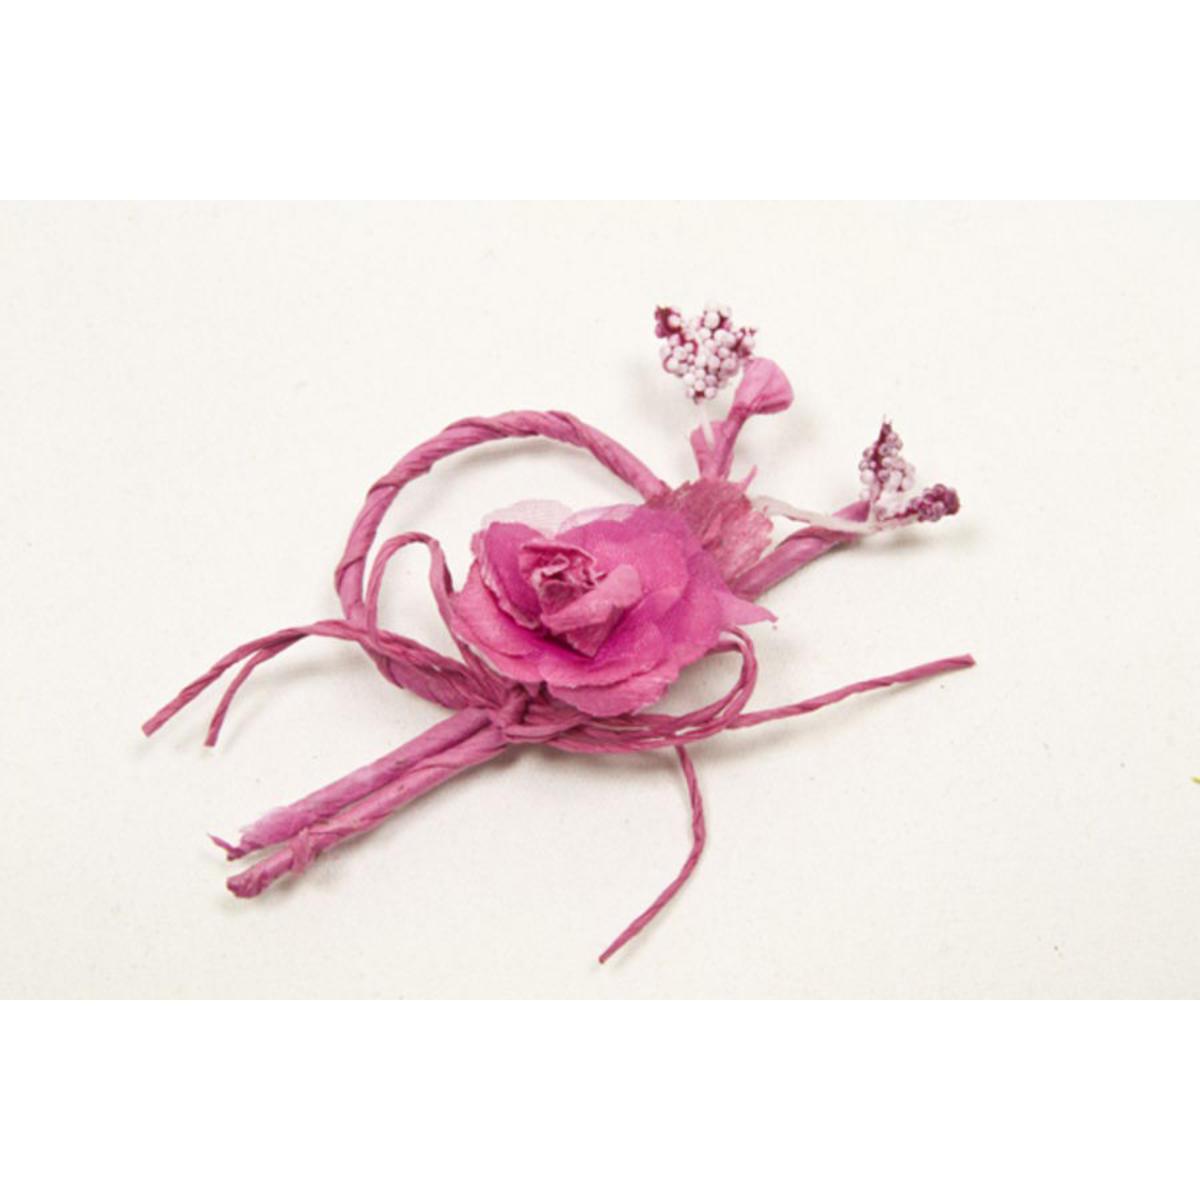 Lot de 6 bouquets anneau en osier avec rose en organza - 8 cm - Rose fushia